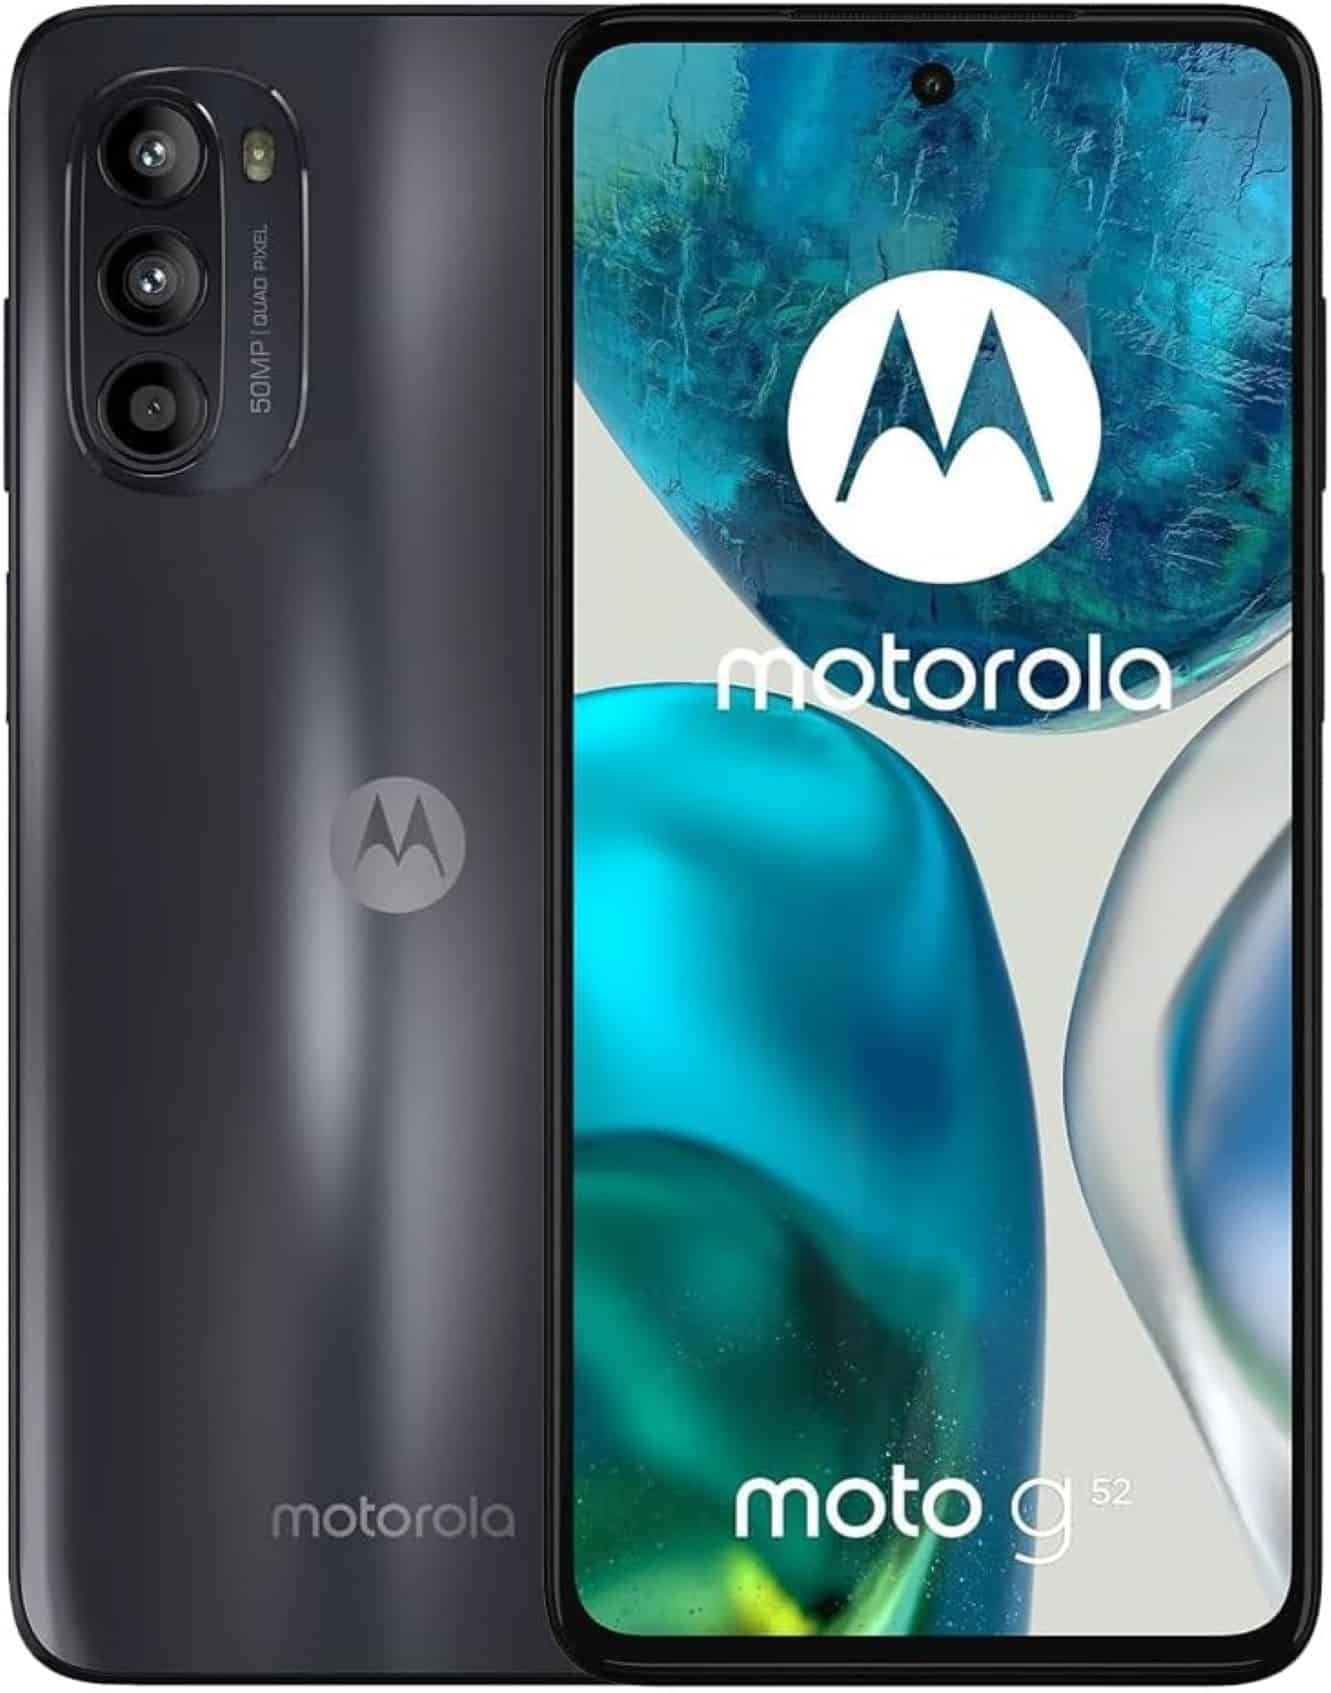 Smartphone Motorola Moto G52 características 